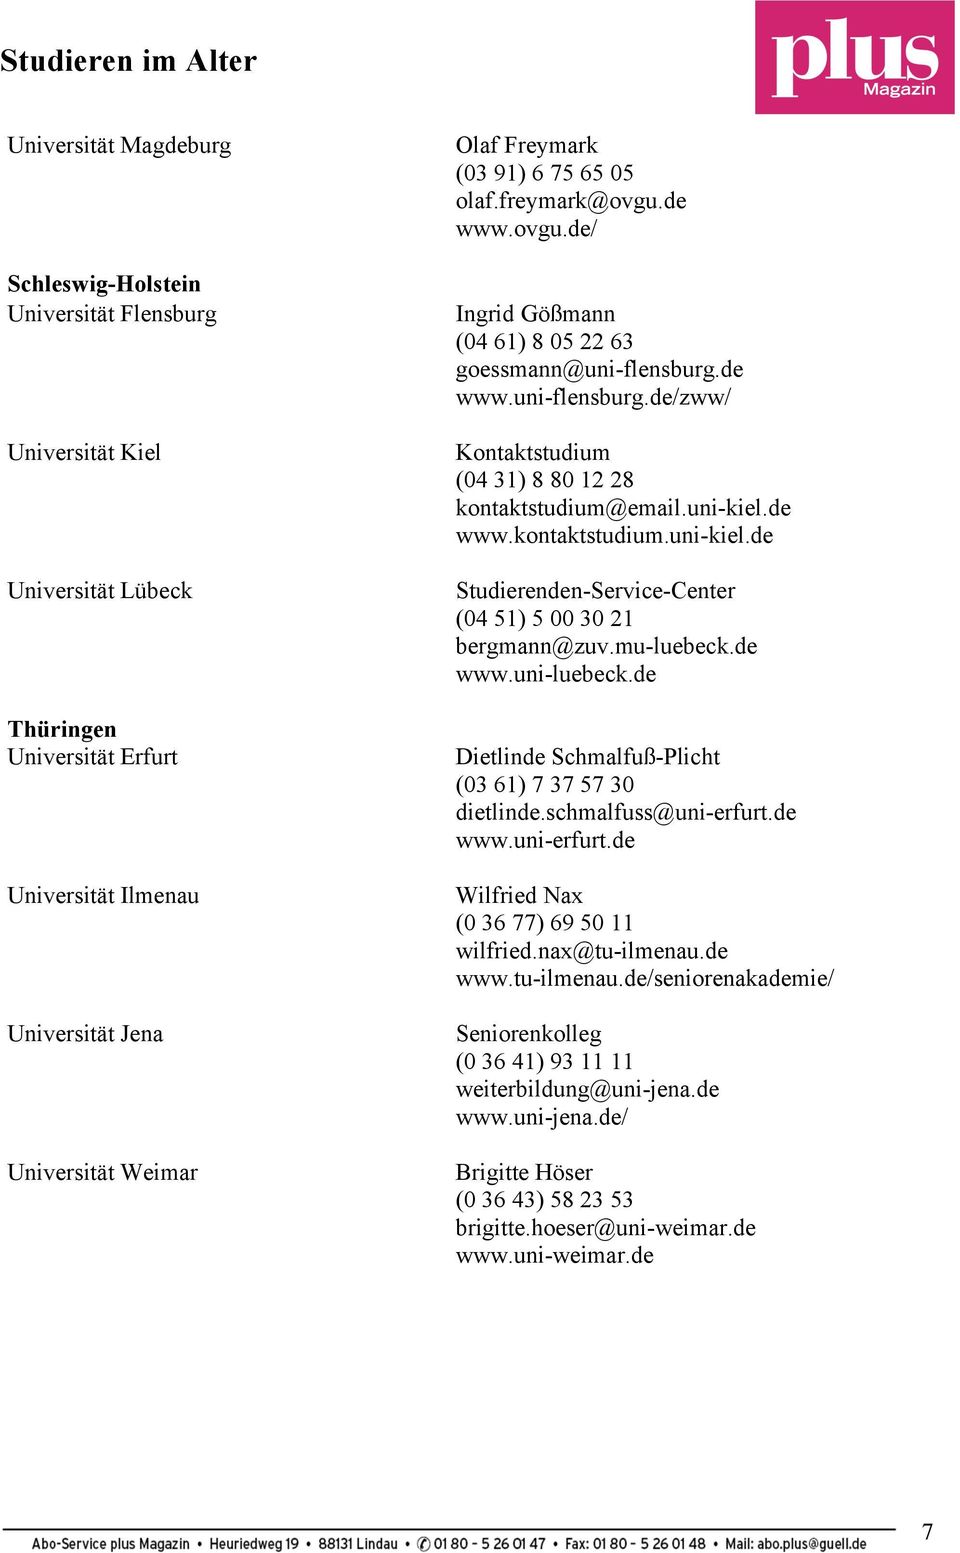 uni-kiel.de www.kontaktstudium.uni-kiel.de Studierenden-Service-Center (04 51) 5 00 30 21 bergmann@zuv.mu-luebeck.de www.uni-luebeck.de Dietlinde Schmalfuß-Plicht (03 61) 7 37 57 30 dietlinde.